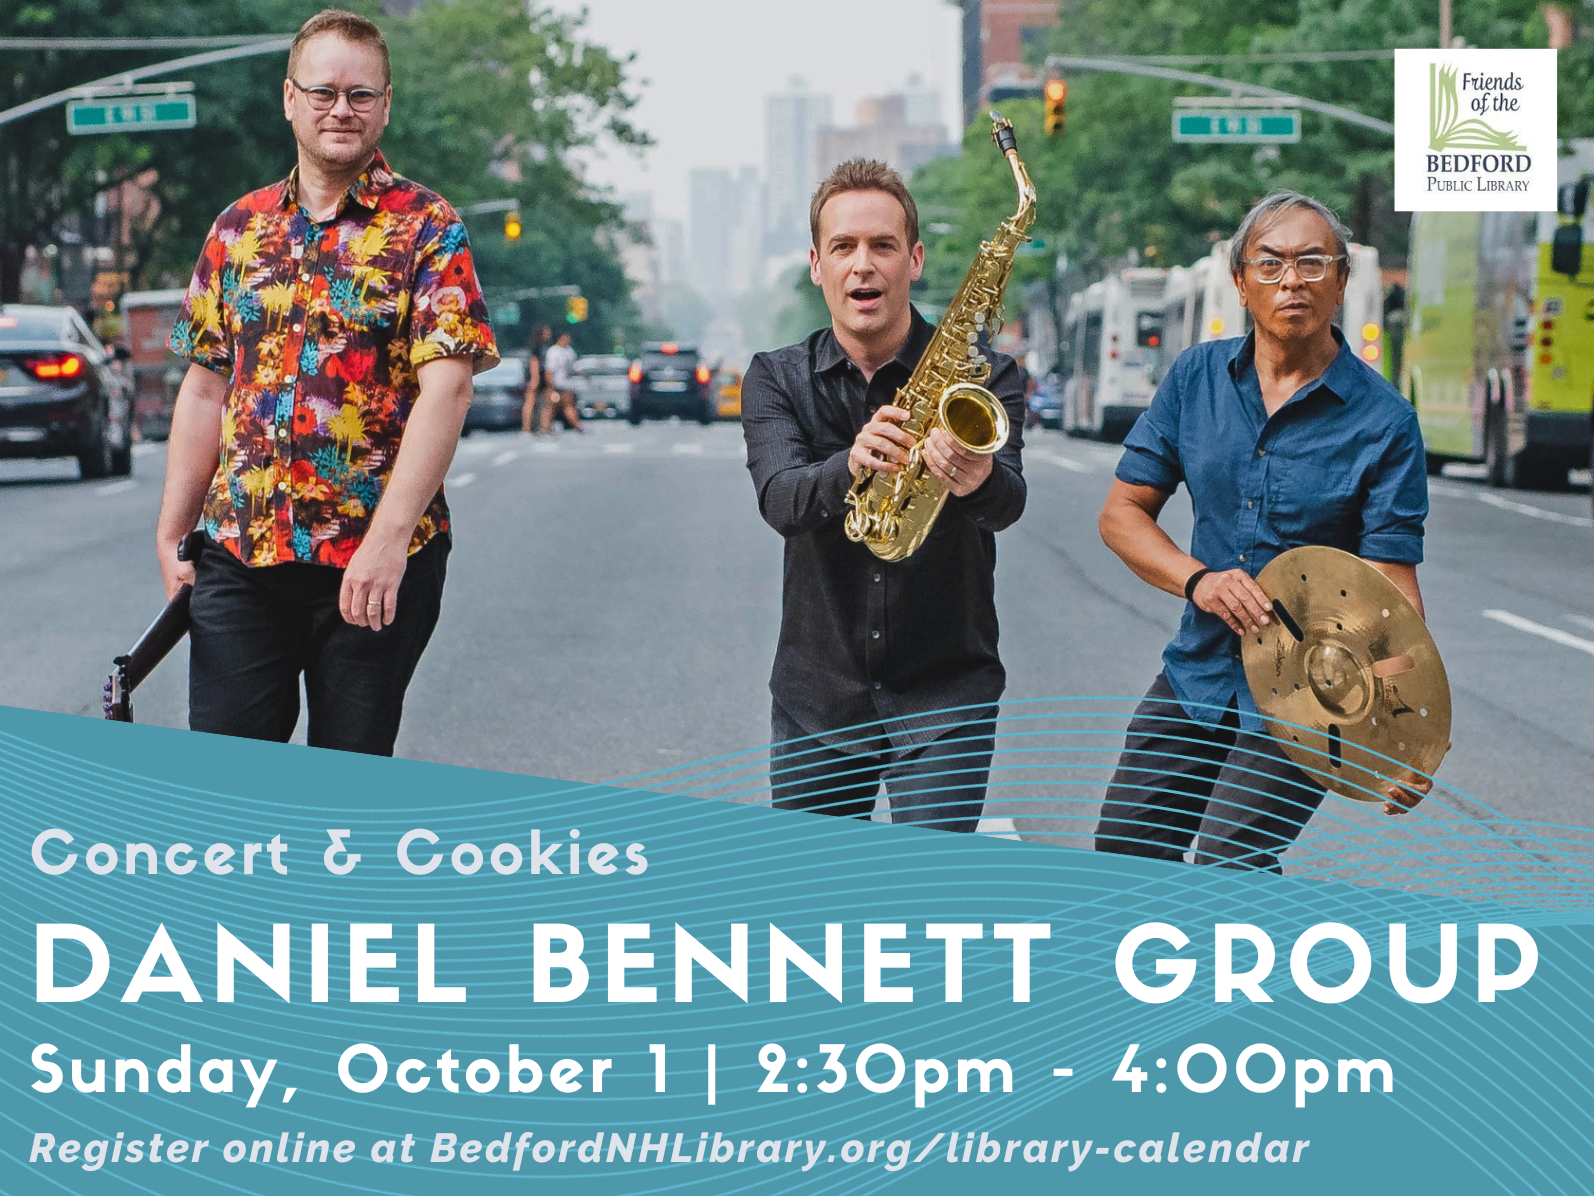 The Daniel Bennett group at Concert & Cookies October 1